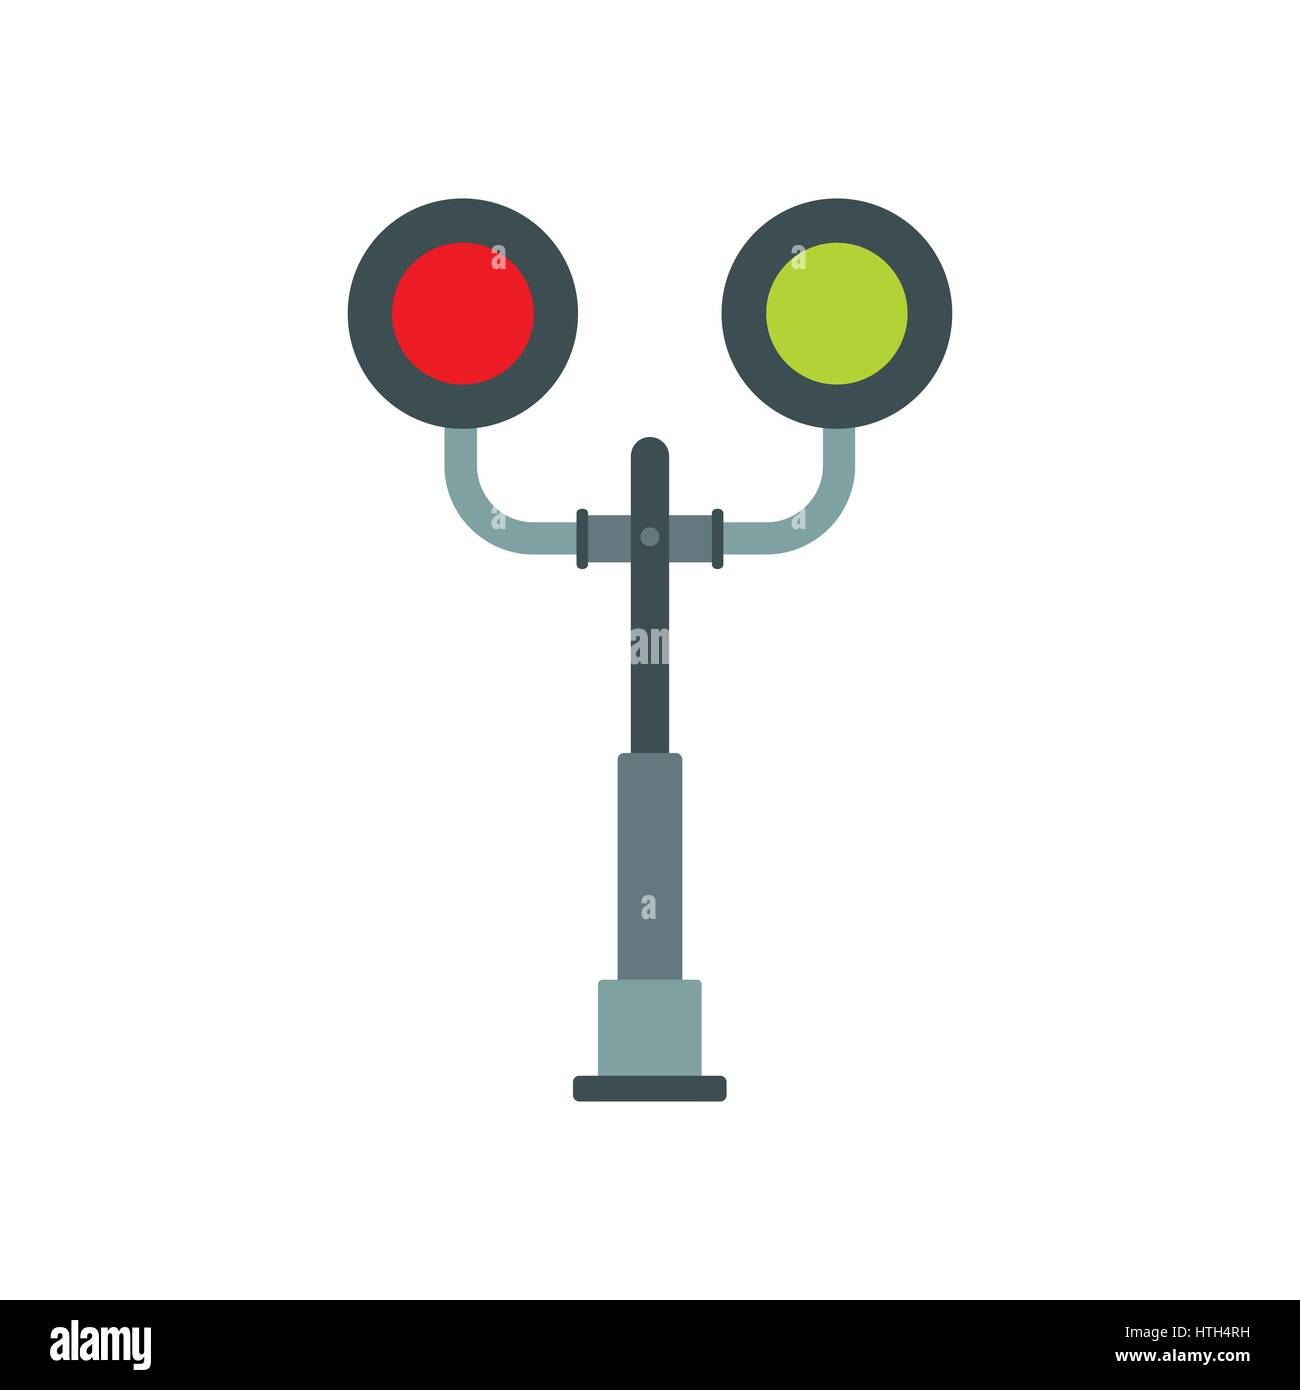 Railway crossing light icon Stock Vector